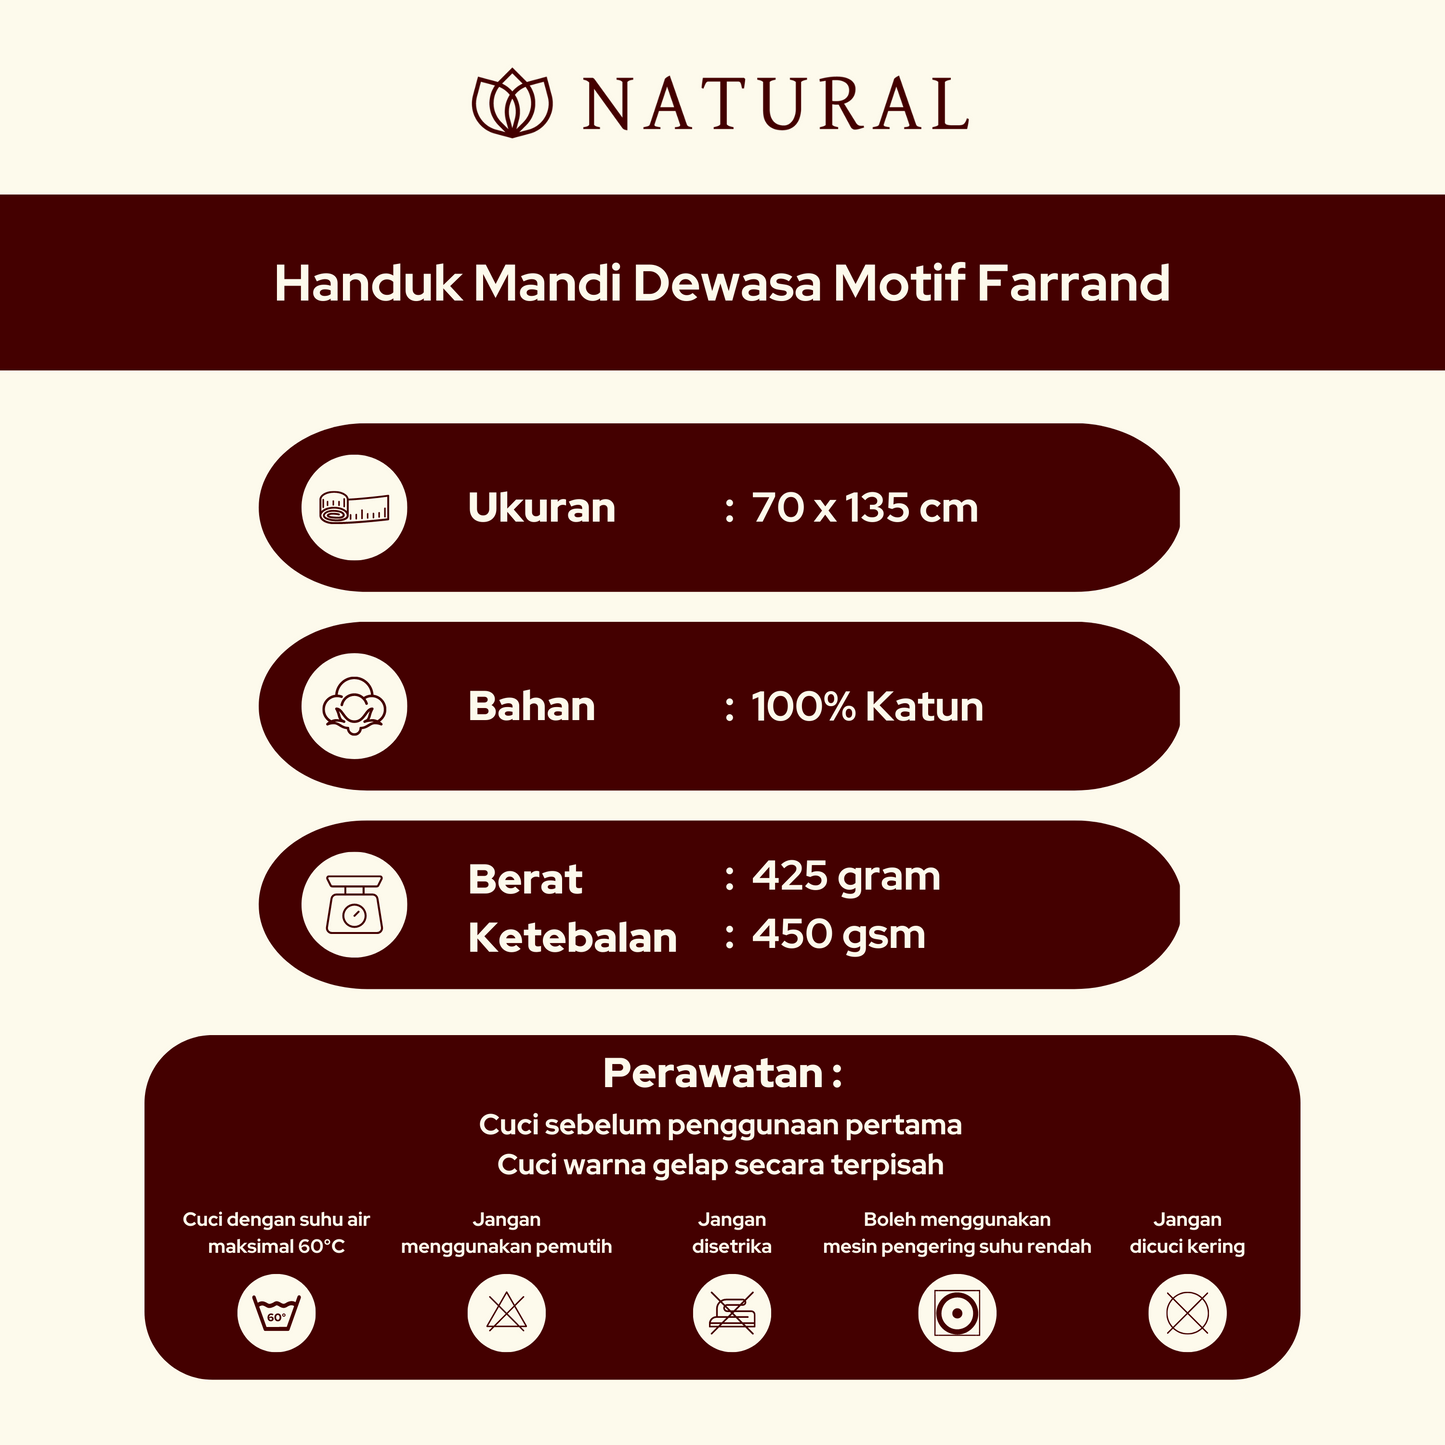 Handuk Mandi Dewasa Natural by Chalmer 70 x 135 cm Motif Farrand